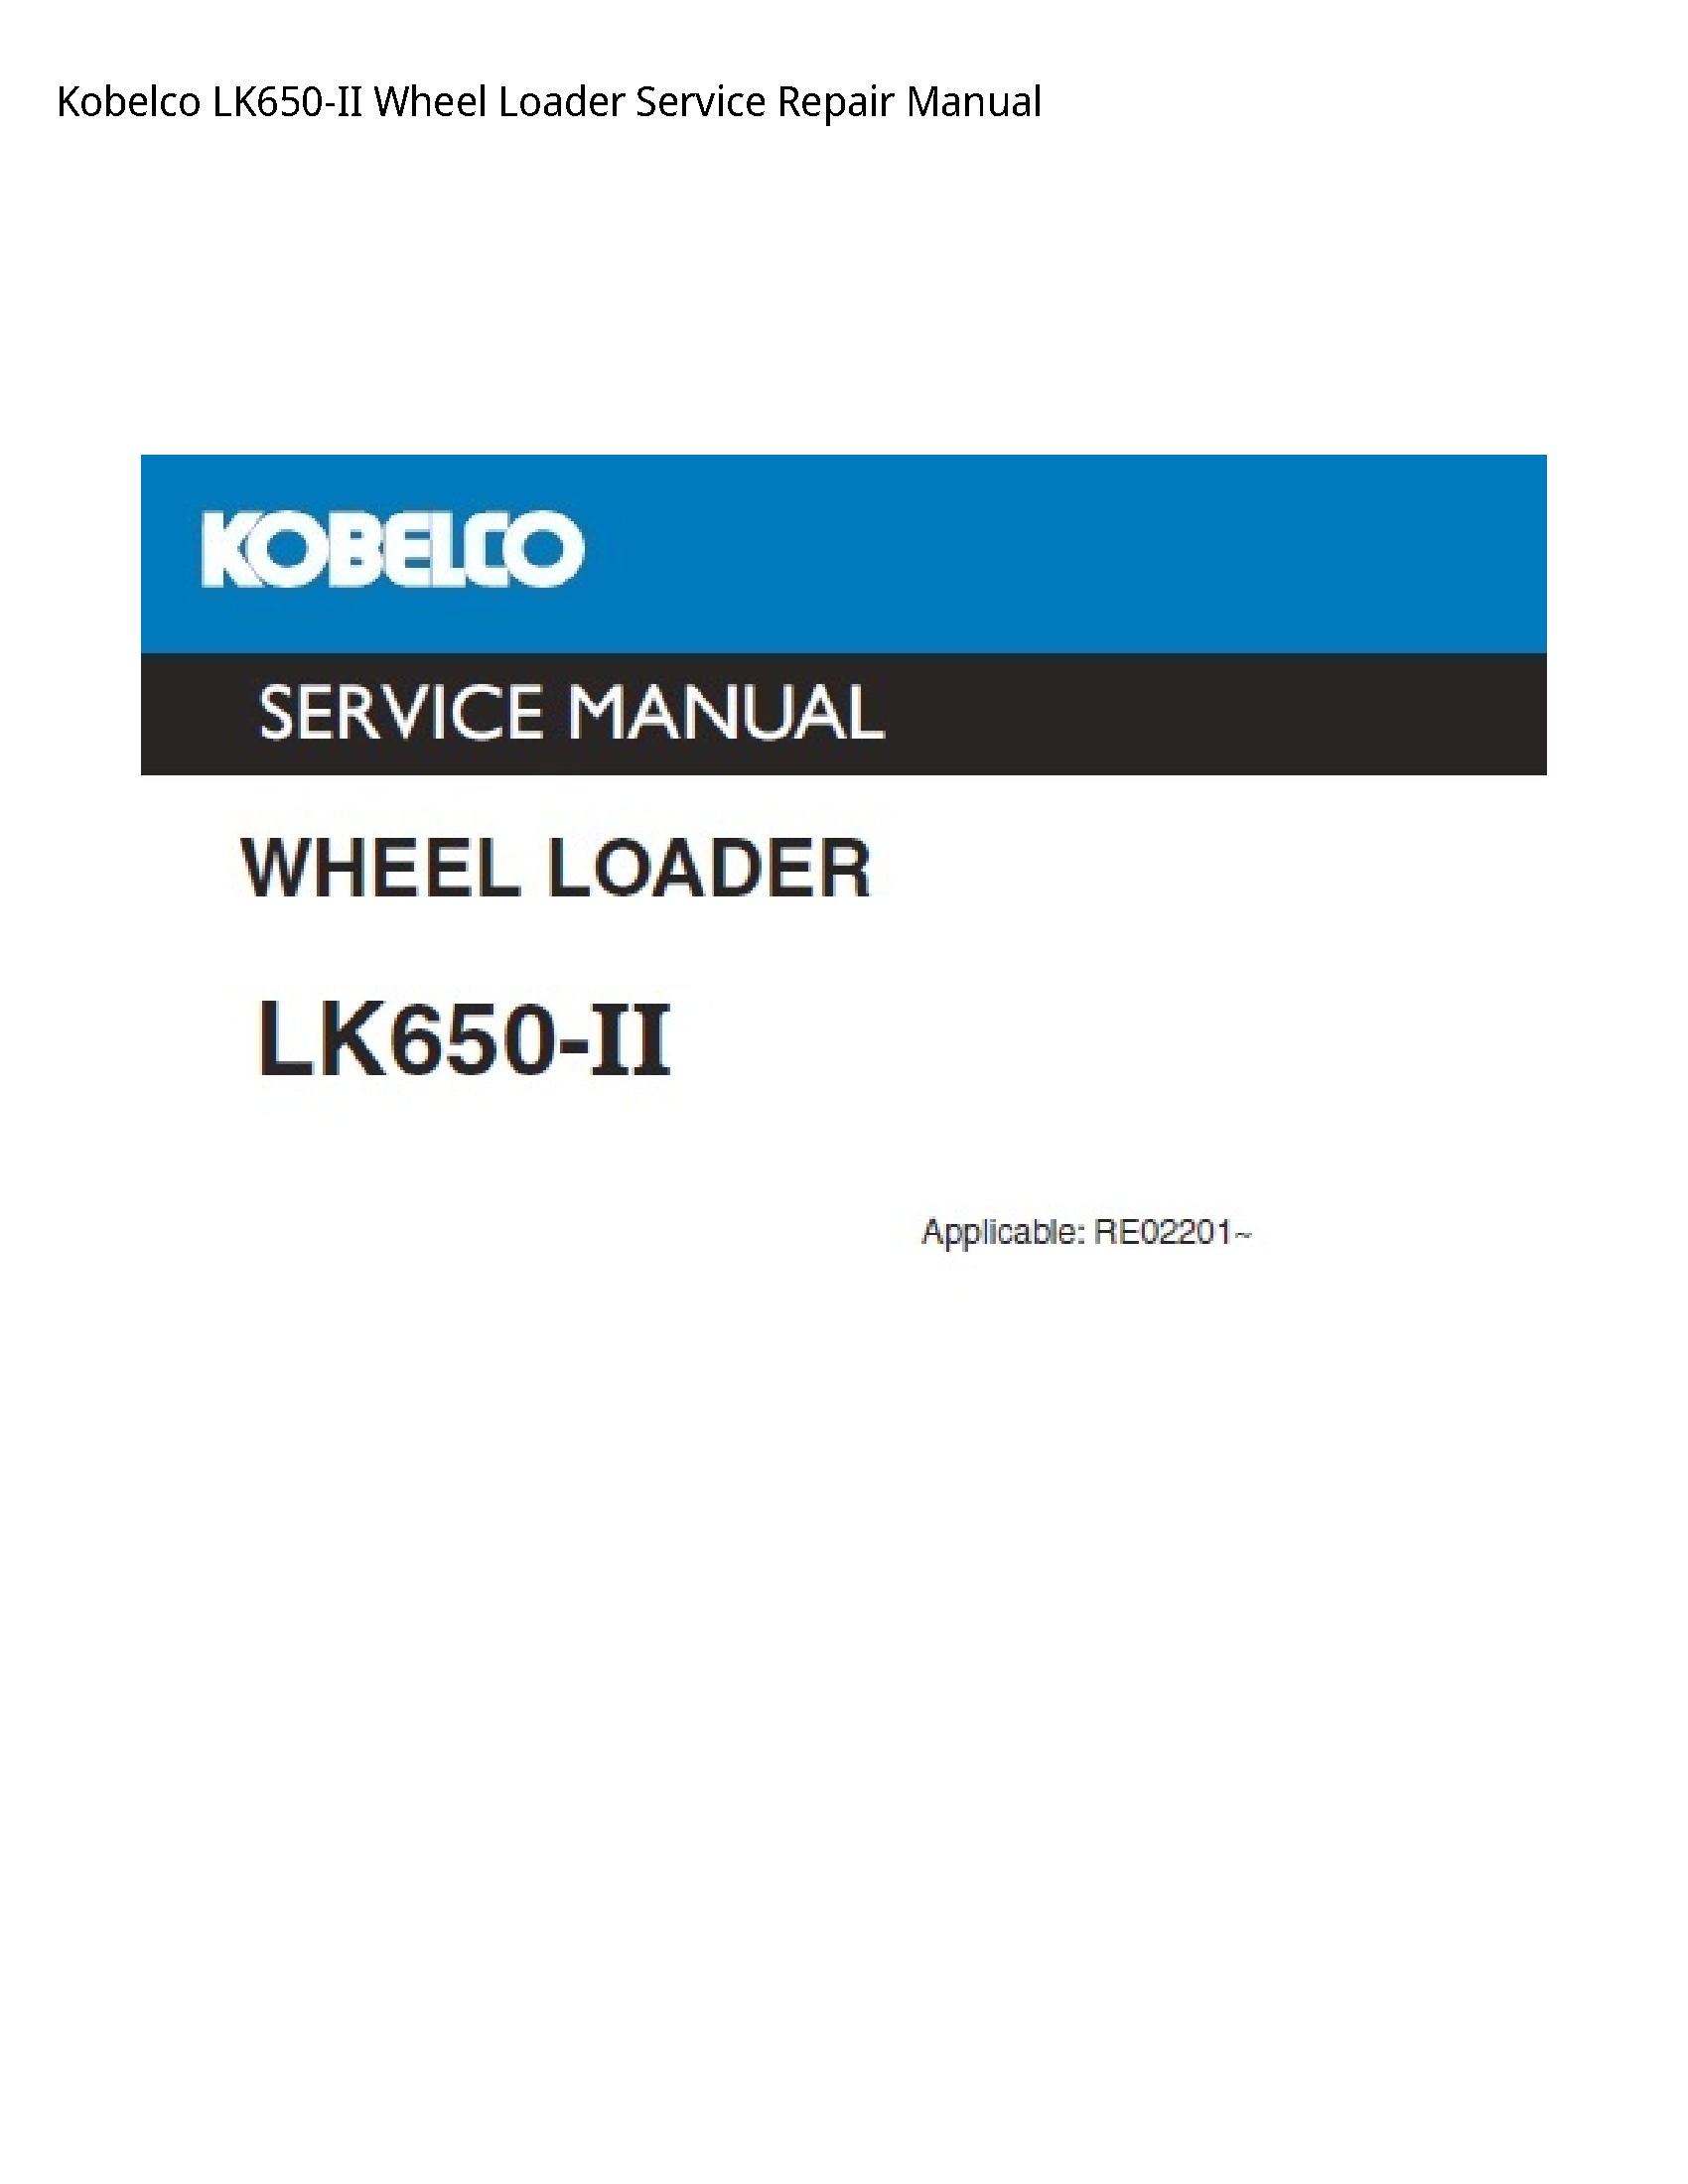 Kobelco LK650-II Wheel Loader manual